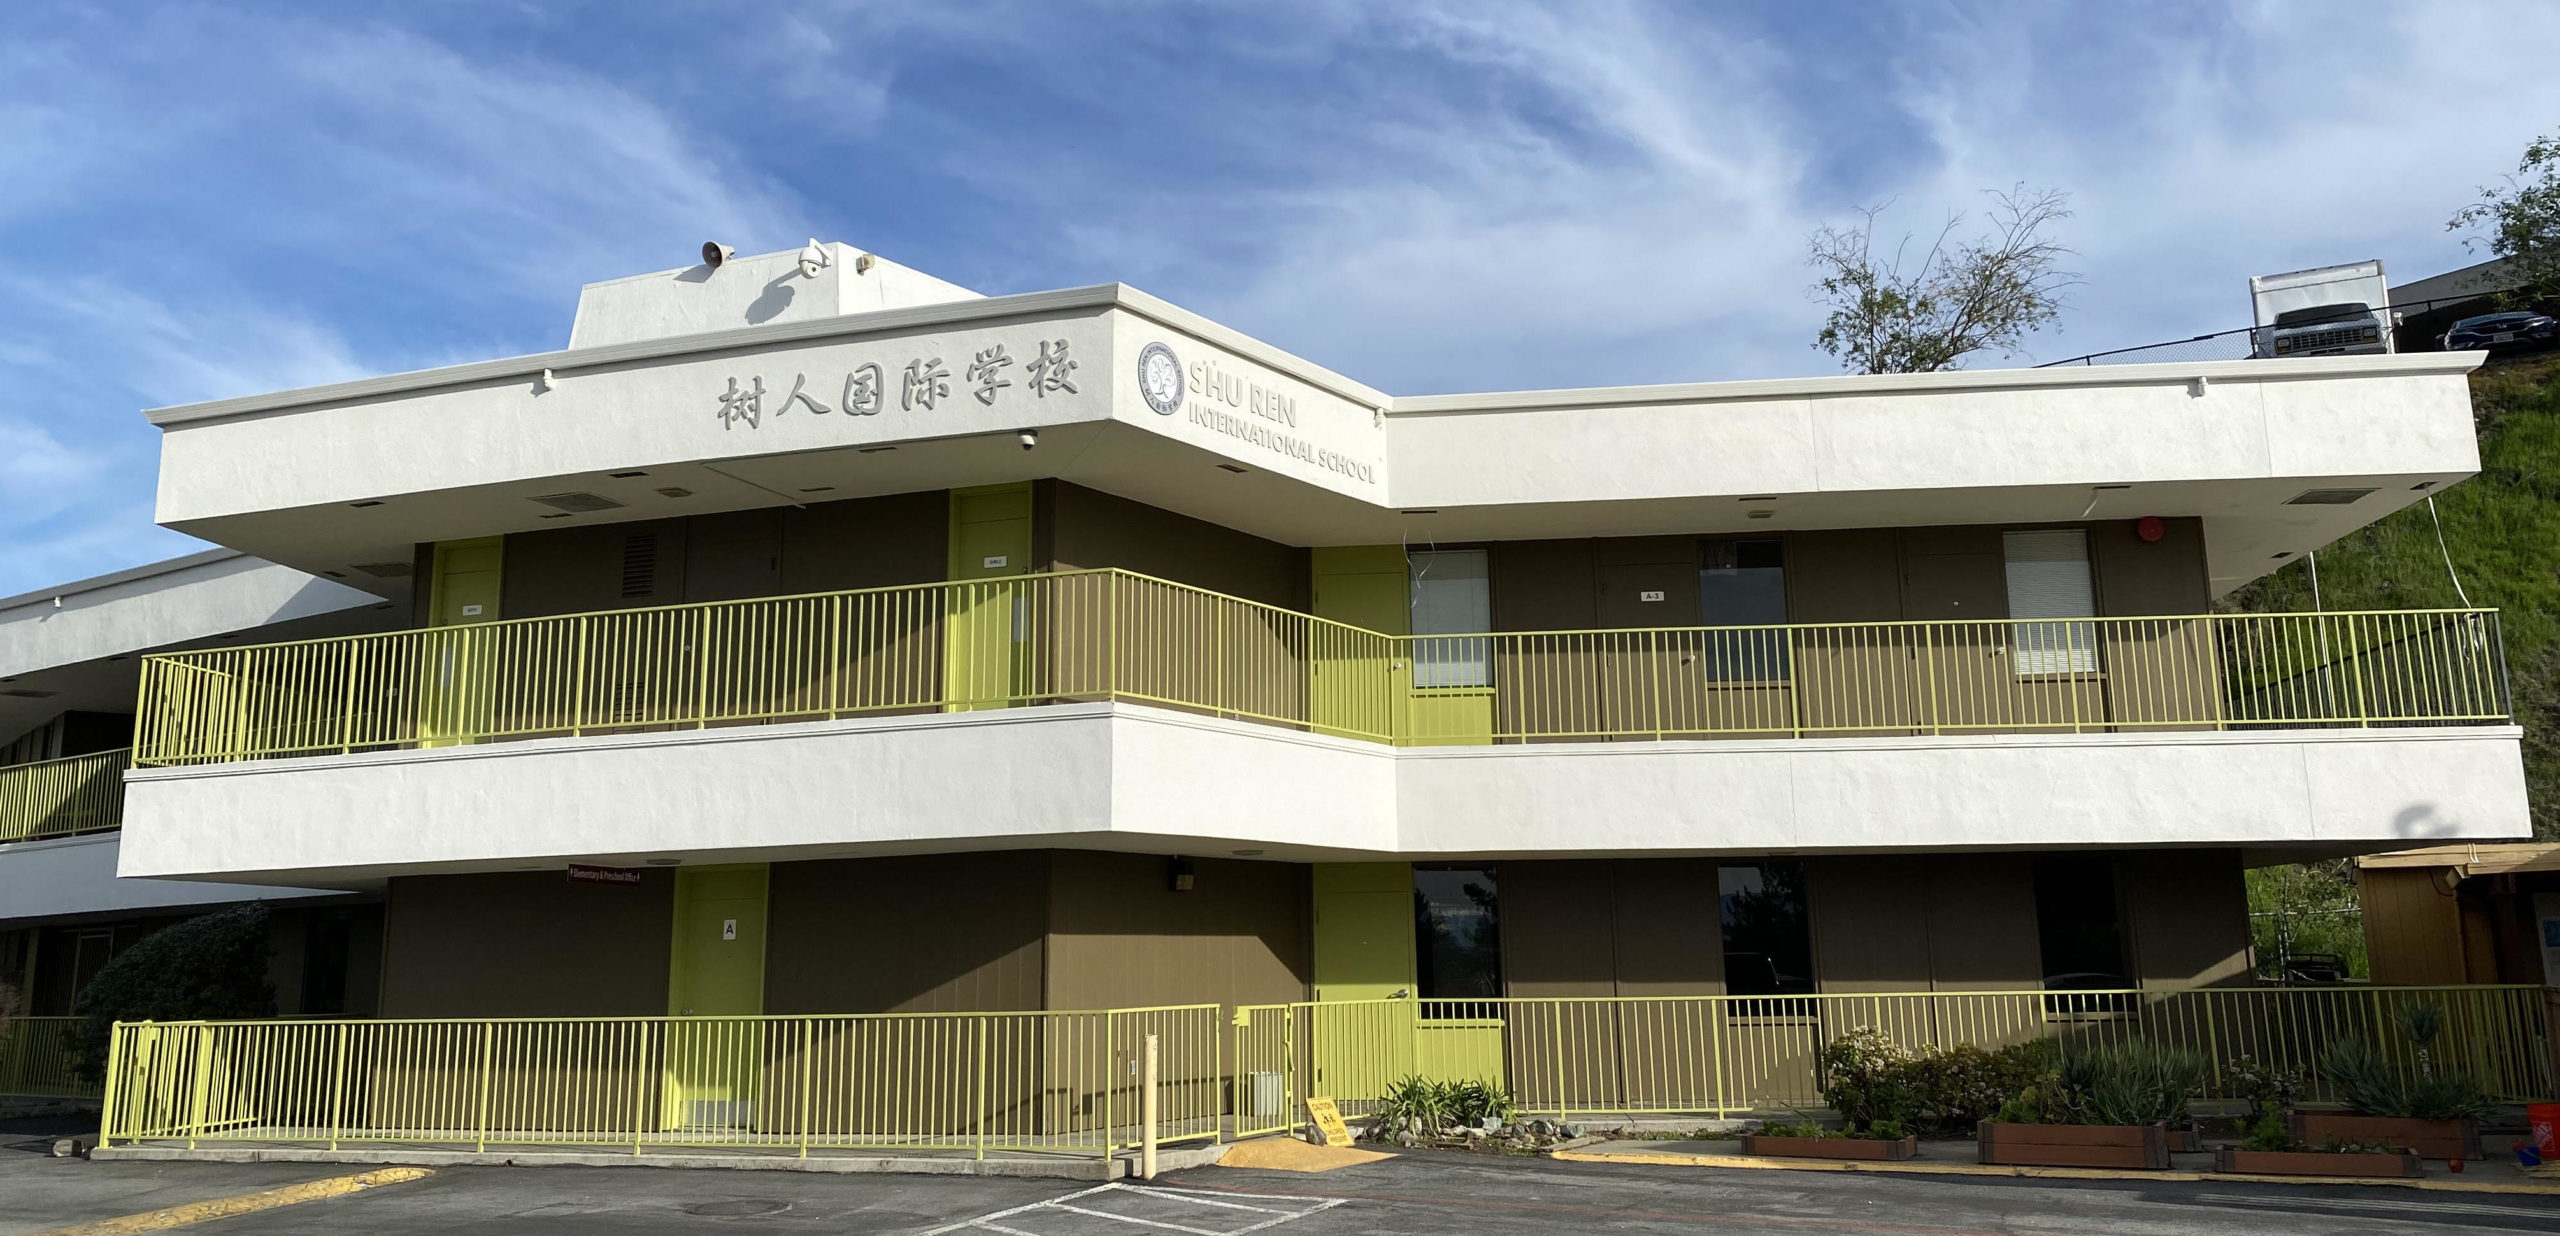 Shu Ren Mandarin Immersion School in San Jose